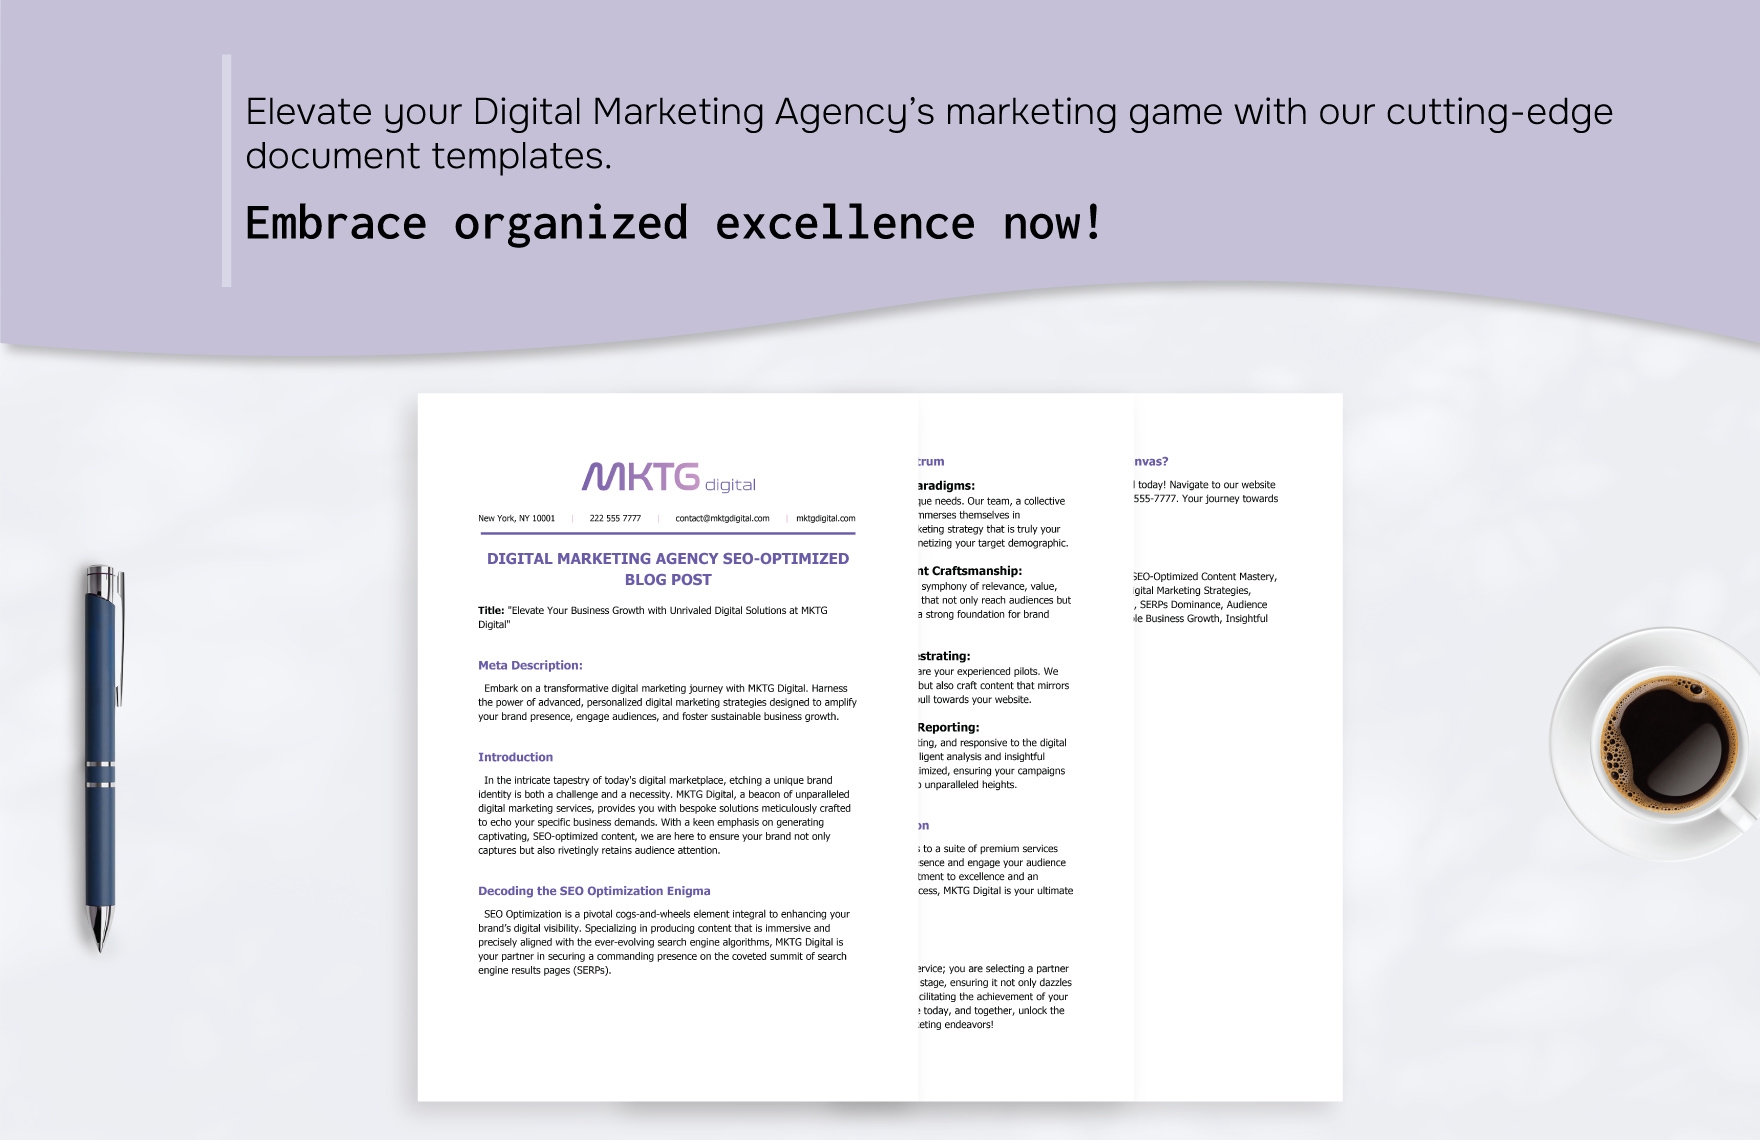 Digital Marketing Agency SEO-Optimized Blog Post Template